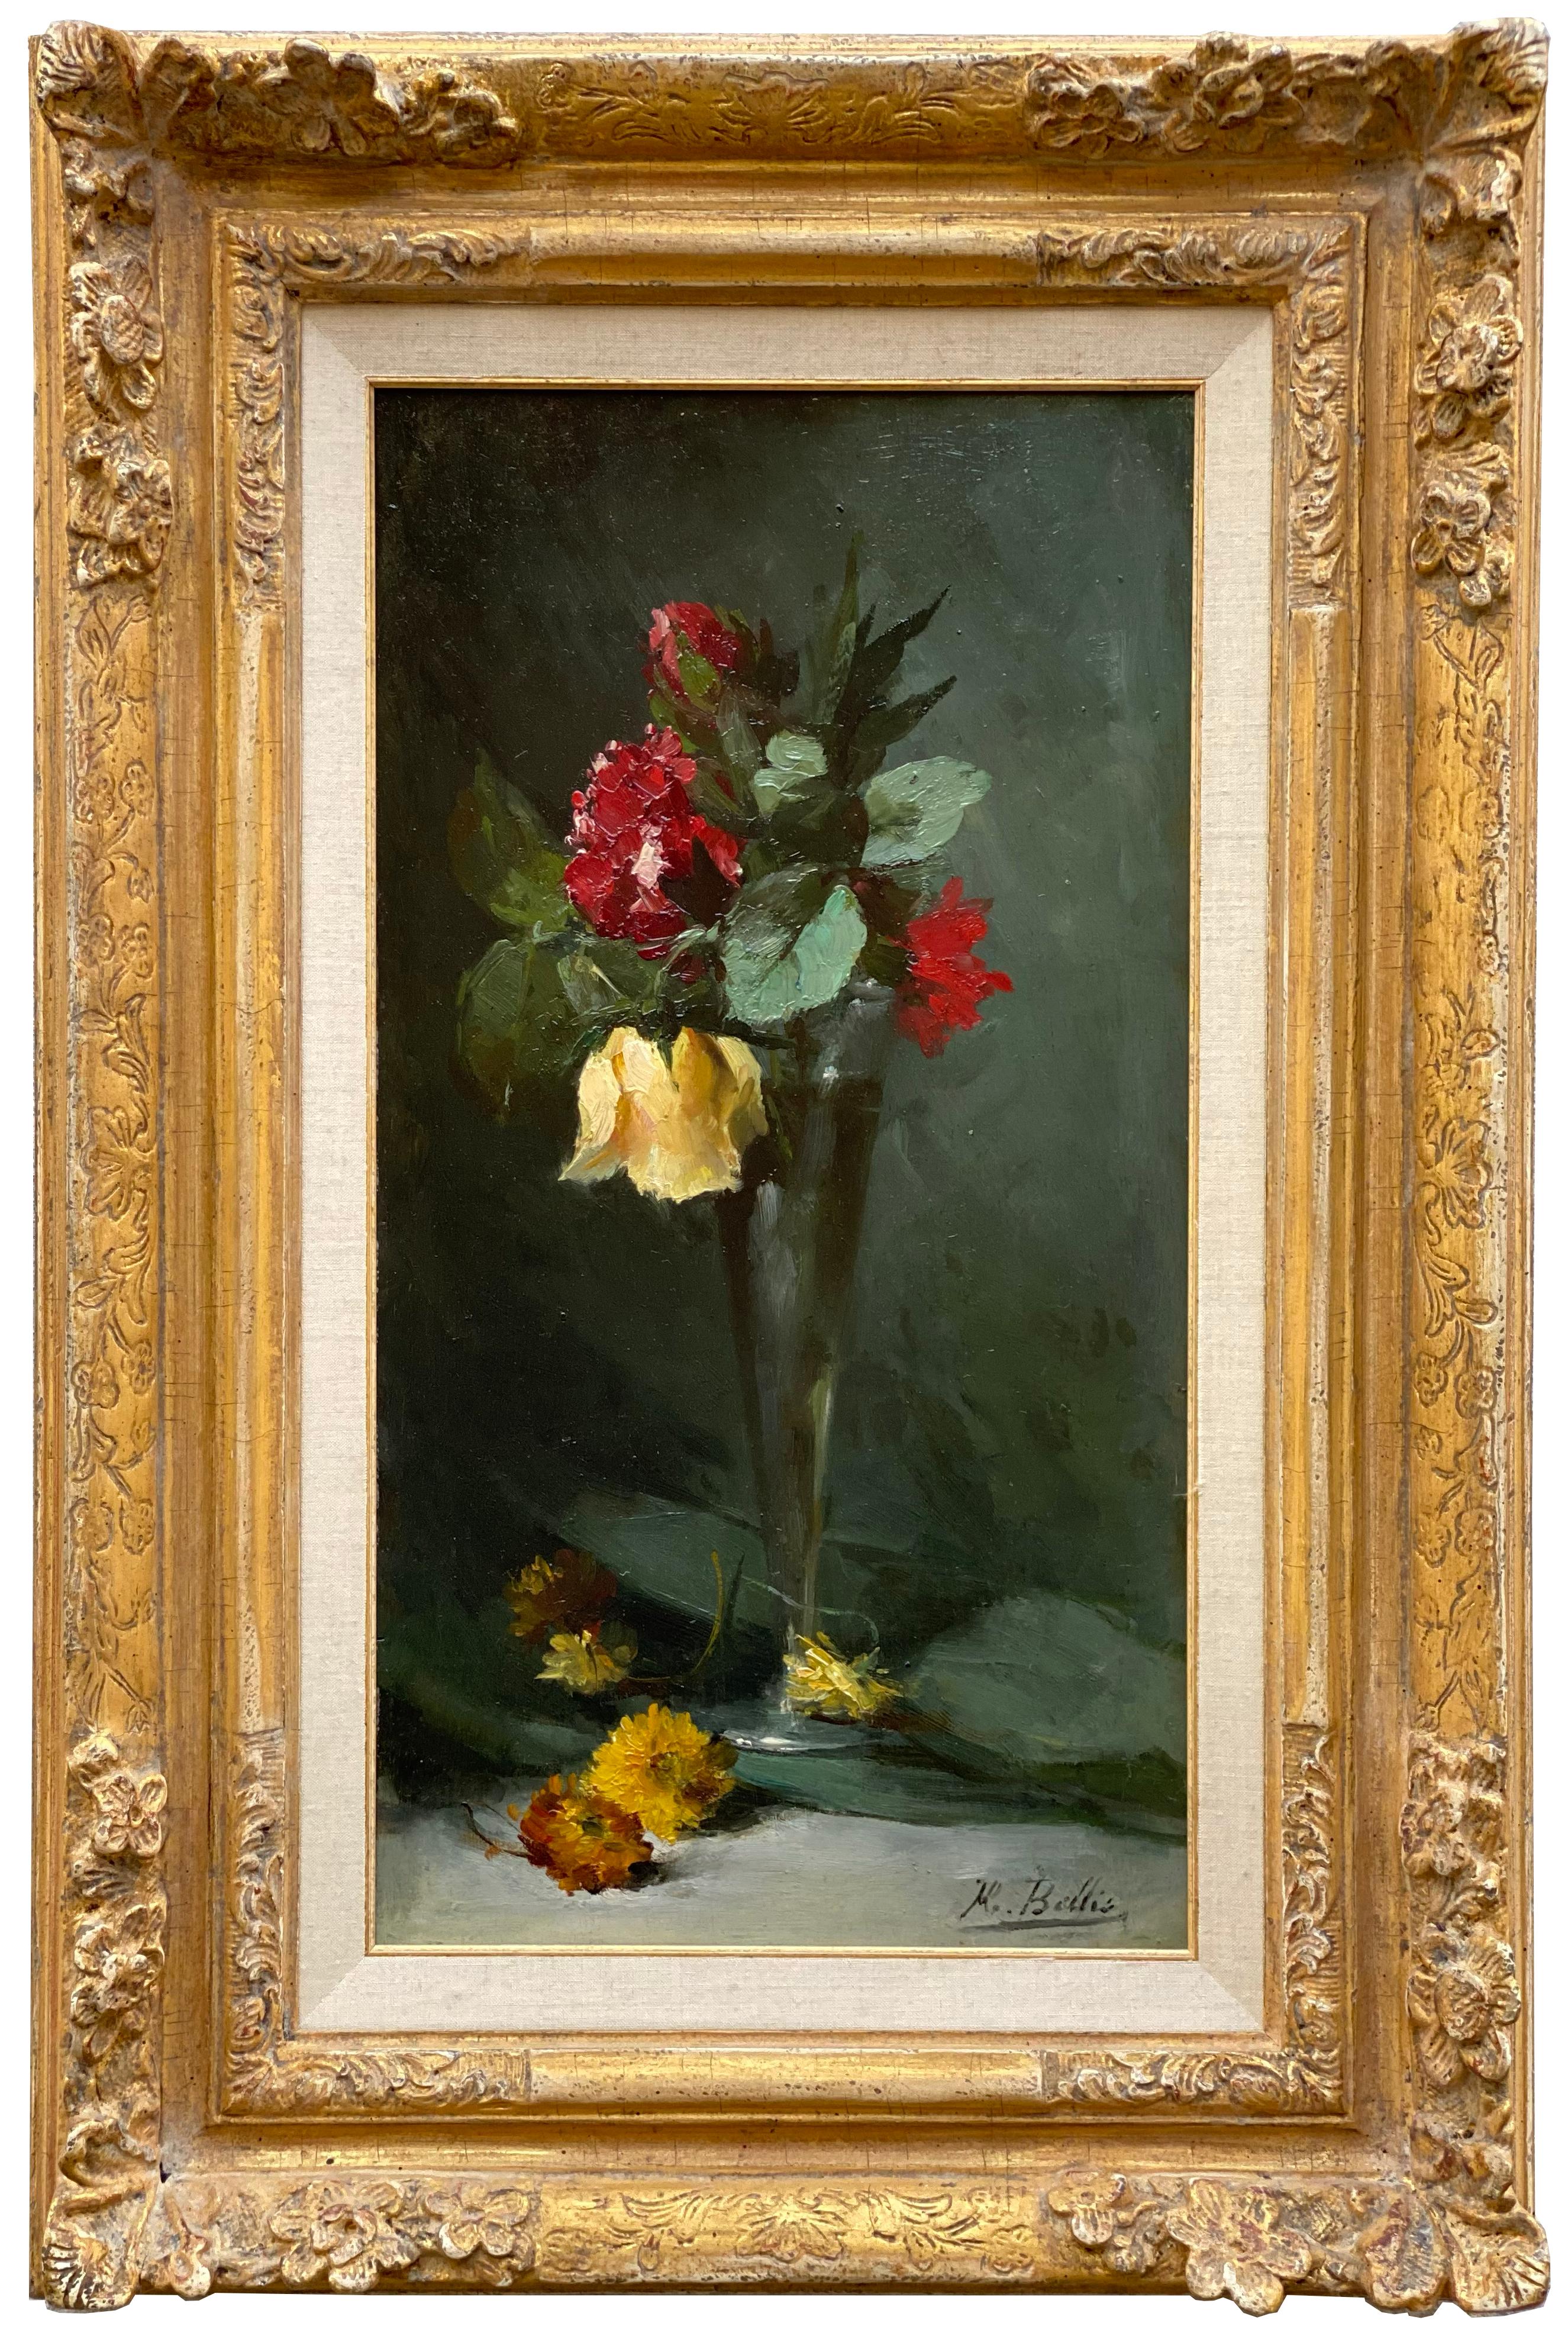   Hubert BELLIS, Bruxelles 1831 - 1902, peintre belge, "Roses rouges et jaunes".